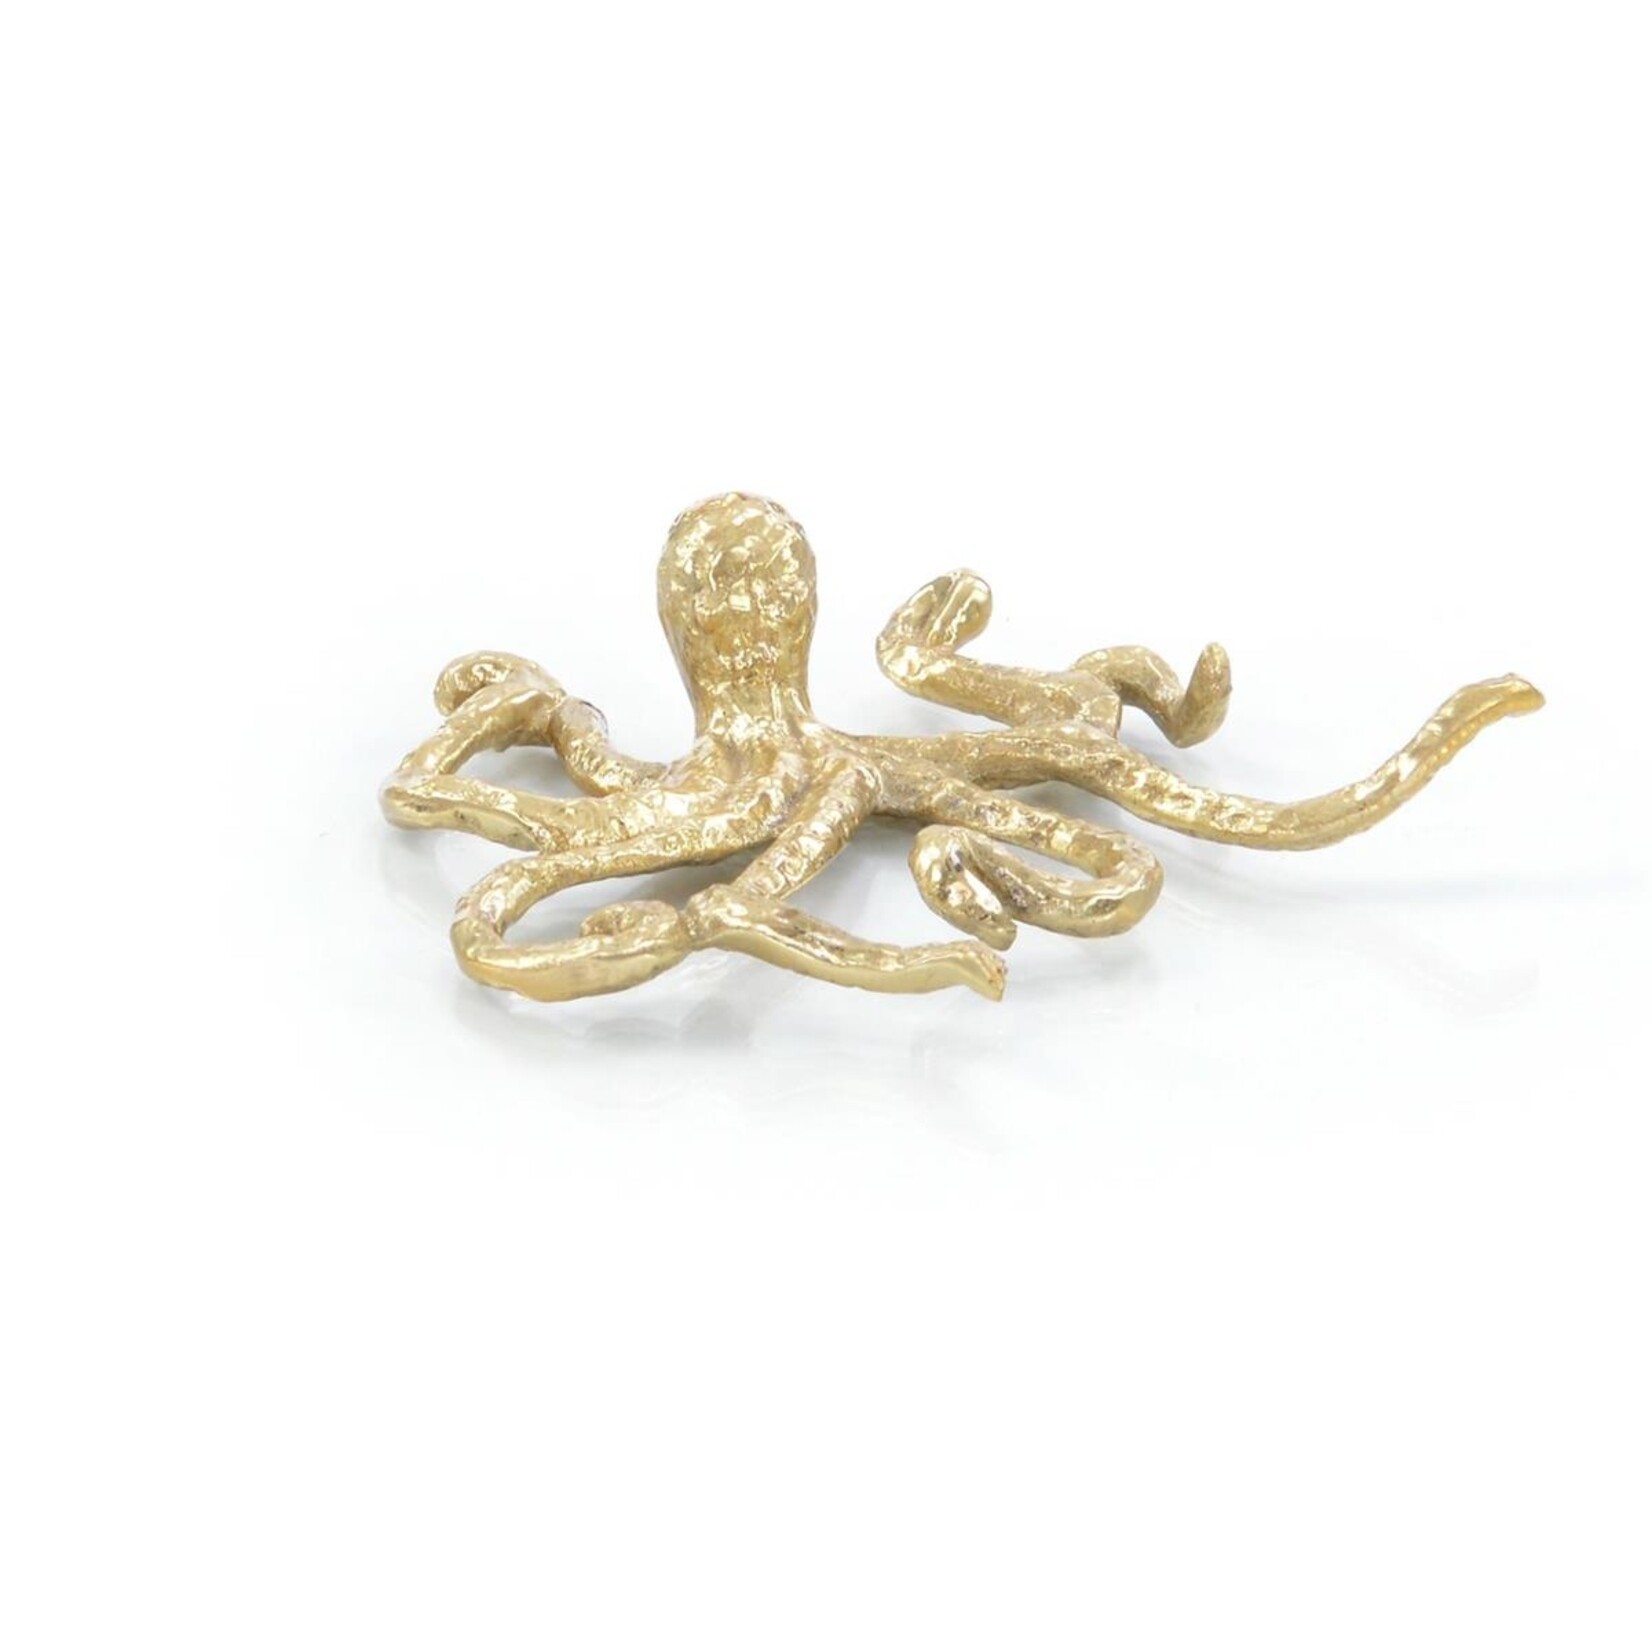 The John Richard Collection, LLC Octopus Sculpture I